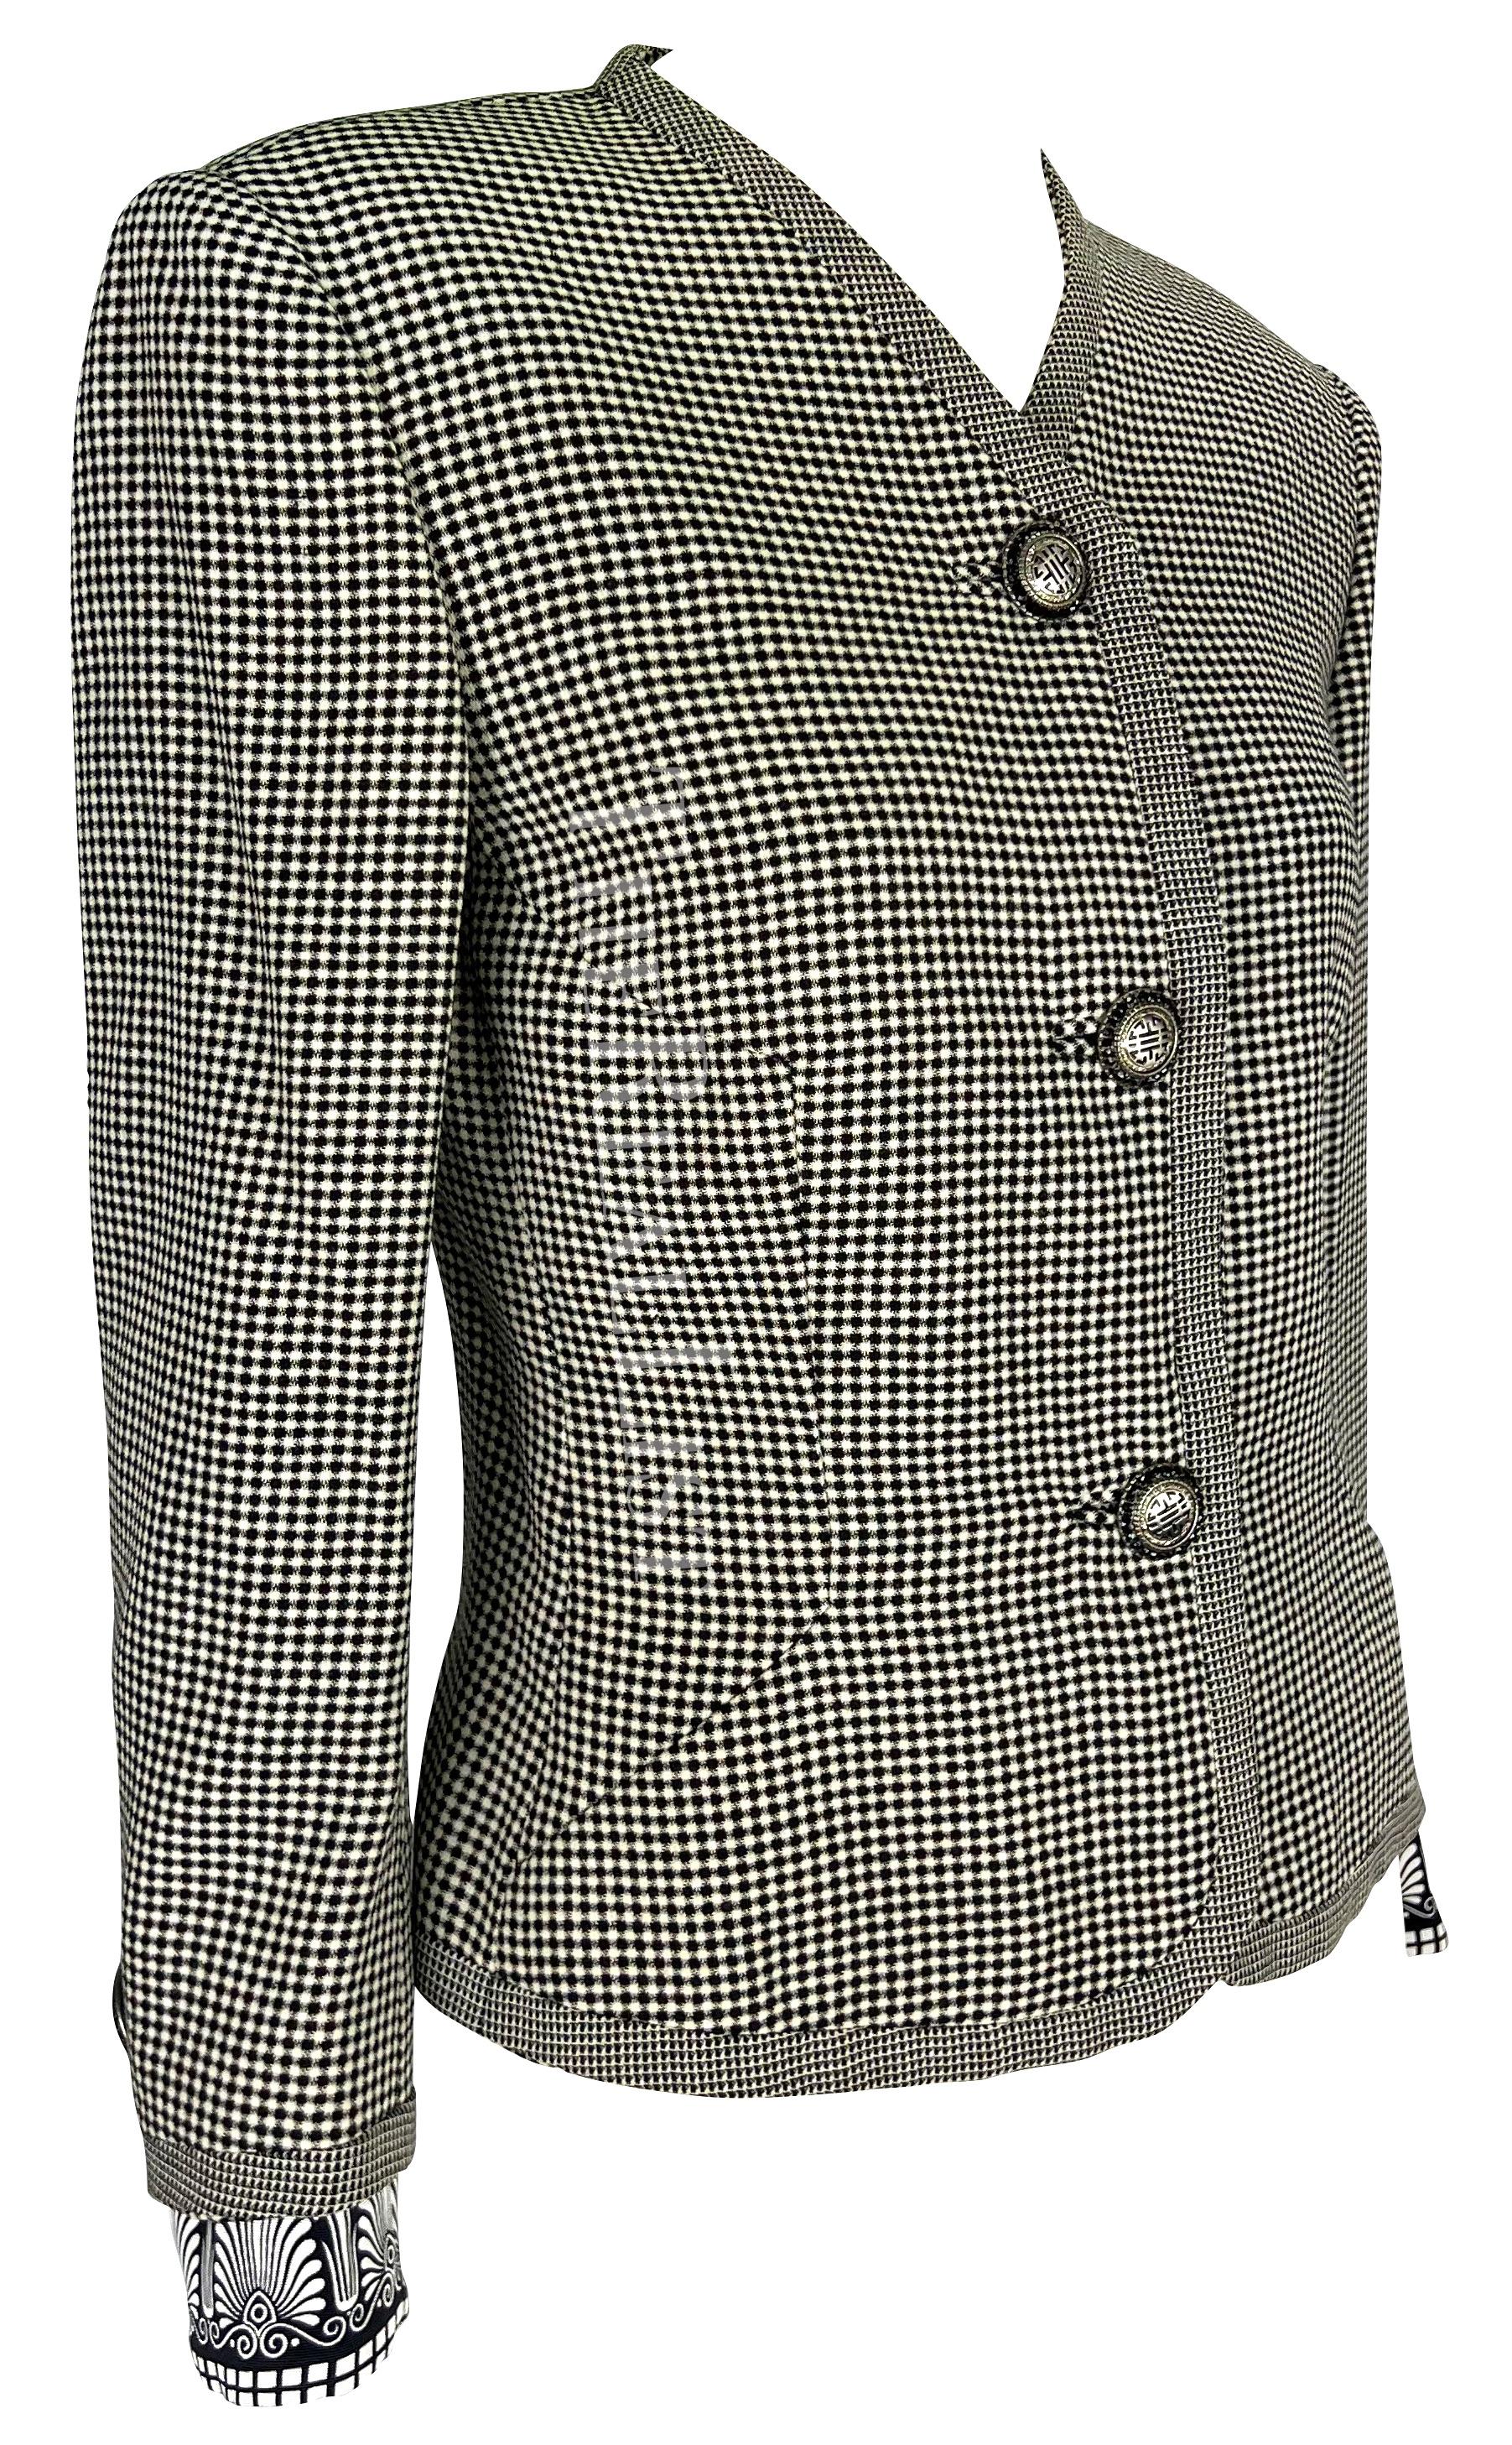 S/S 1992 Gianni Versace Black White Checkered Rhinestone Baroque Jacket For Sale 3